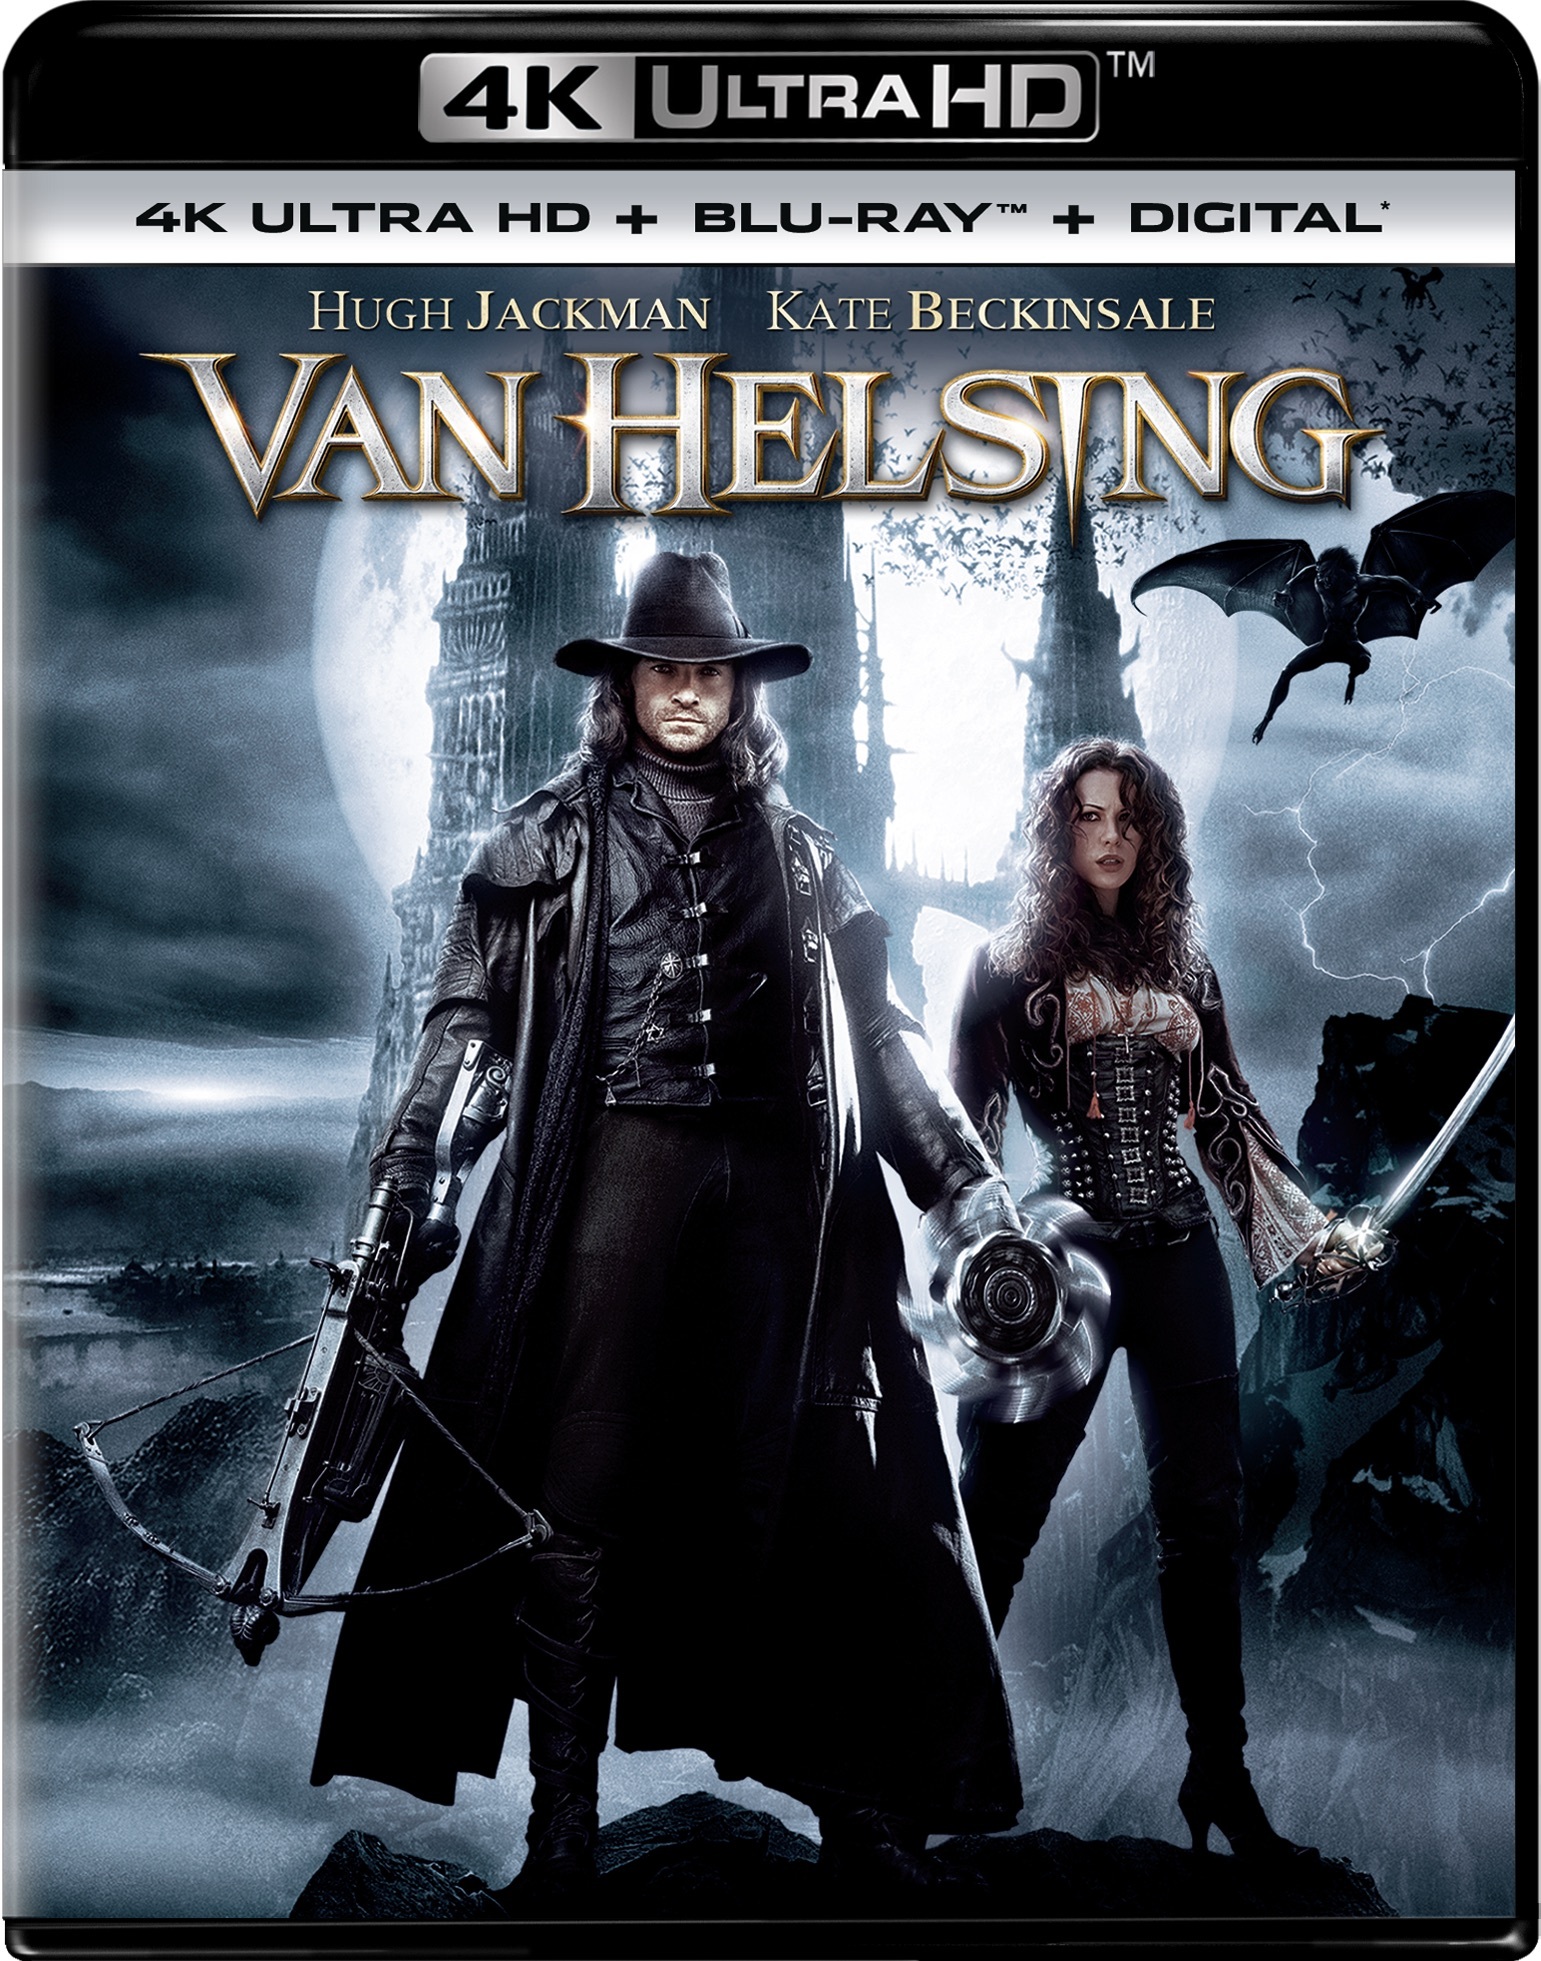 Van Helsing (4K Ultra HD + Digital) - UHD [ 2004 ]  - Action Movies On 4K Ultra HD Blu-ray - Movies On GRUV